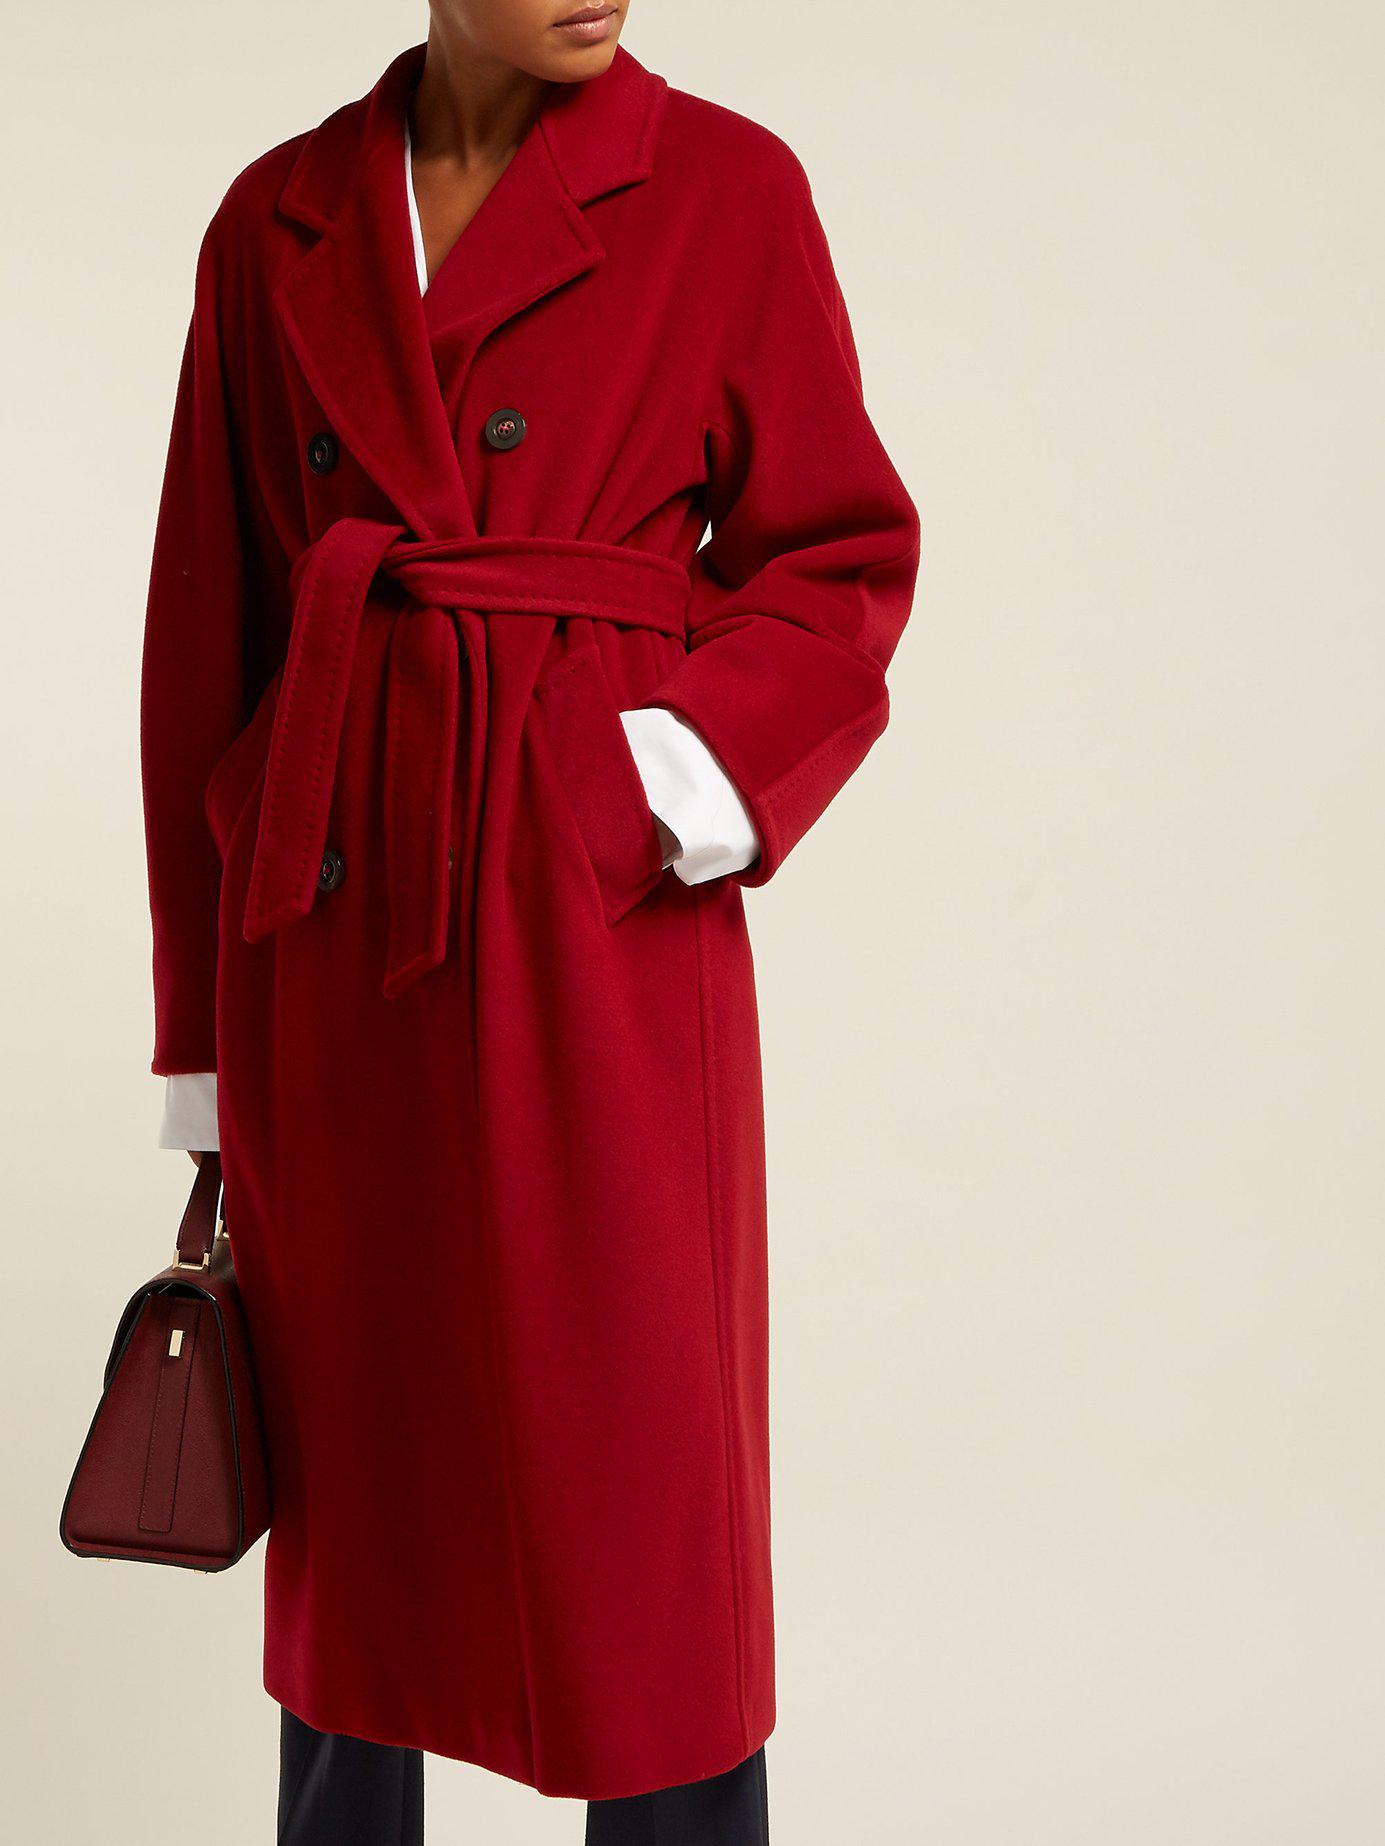 Max Mara Cotton Madame Coat in Red - Lyst